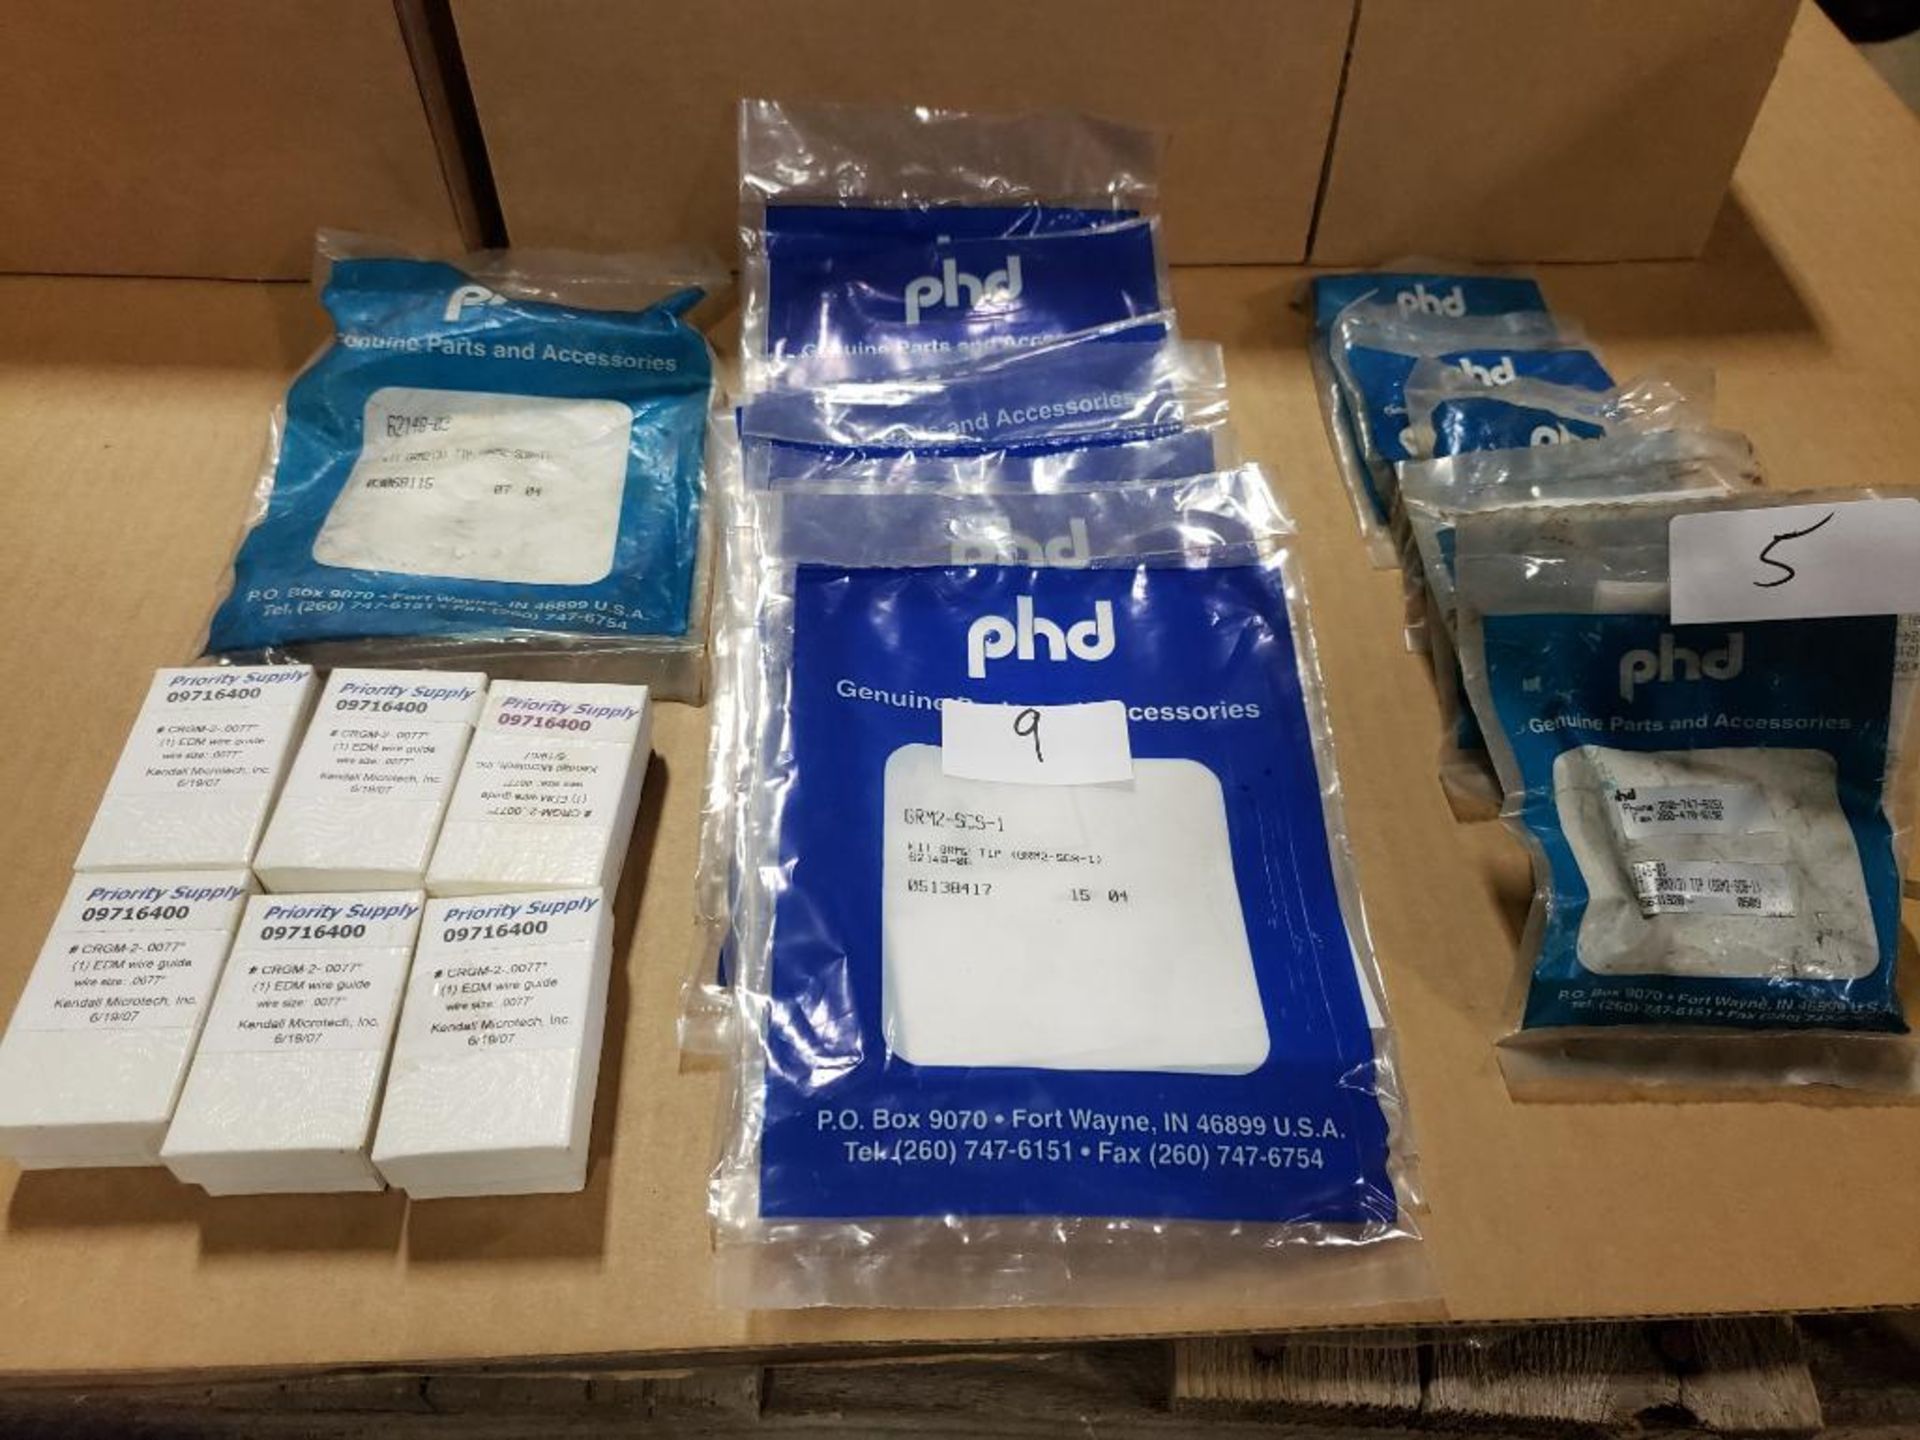 Assorted repair kits. PHD, Priority Supply. New in package.